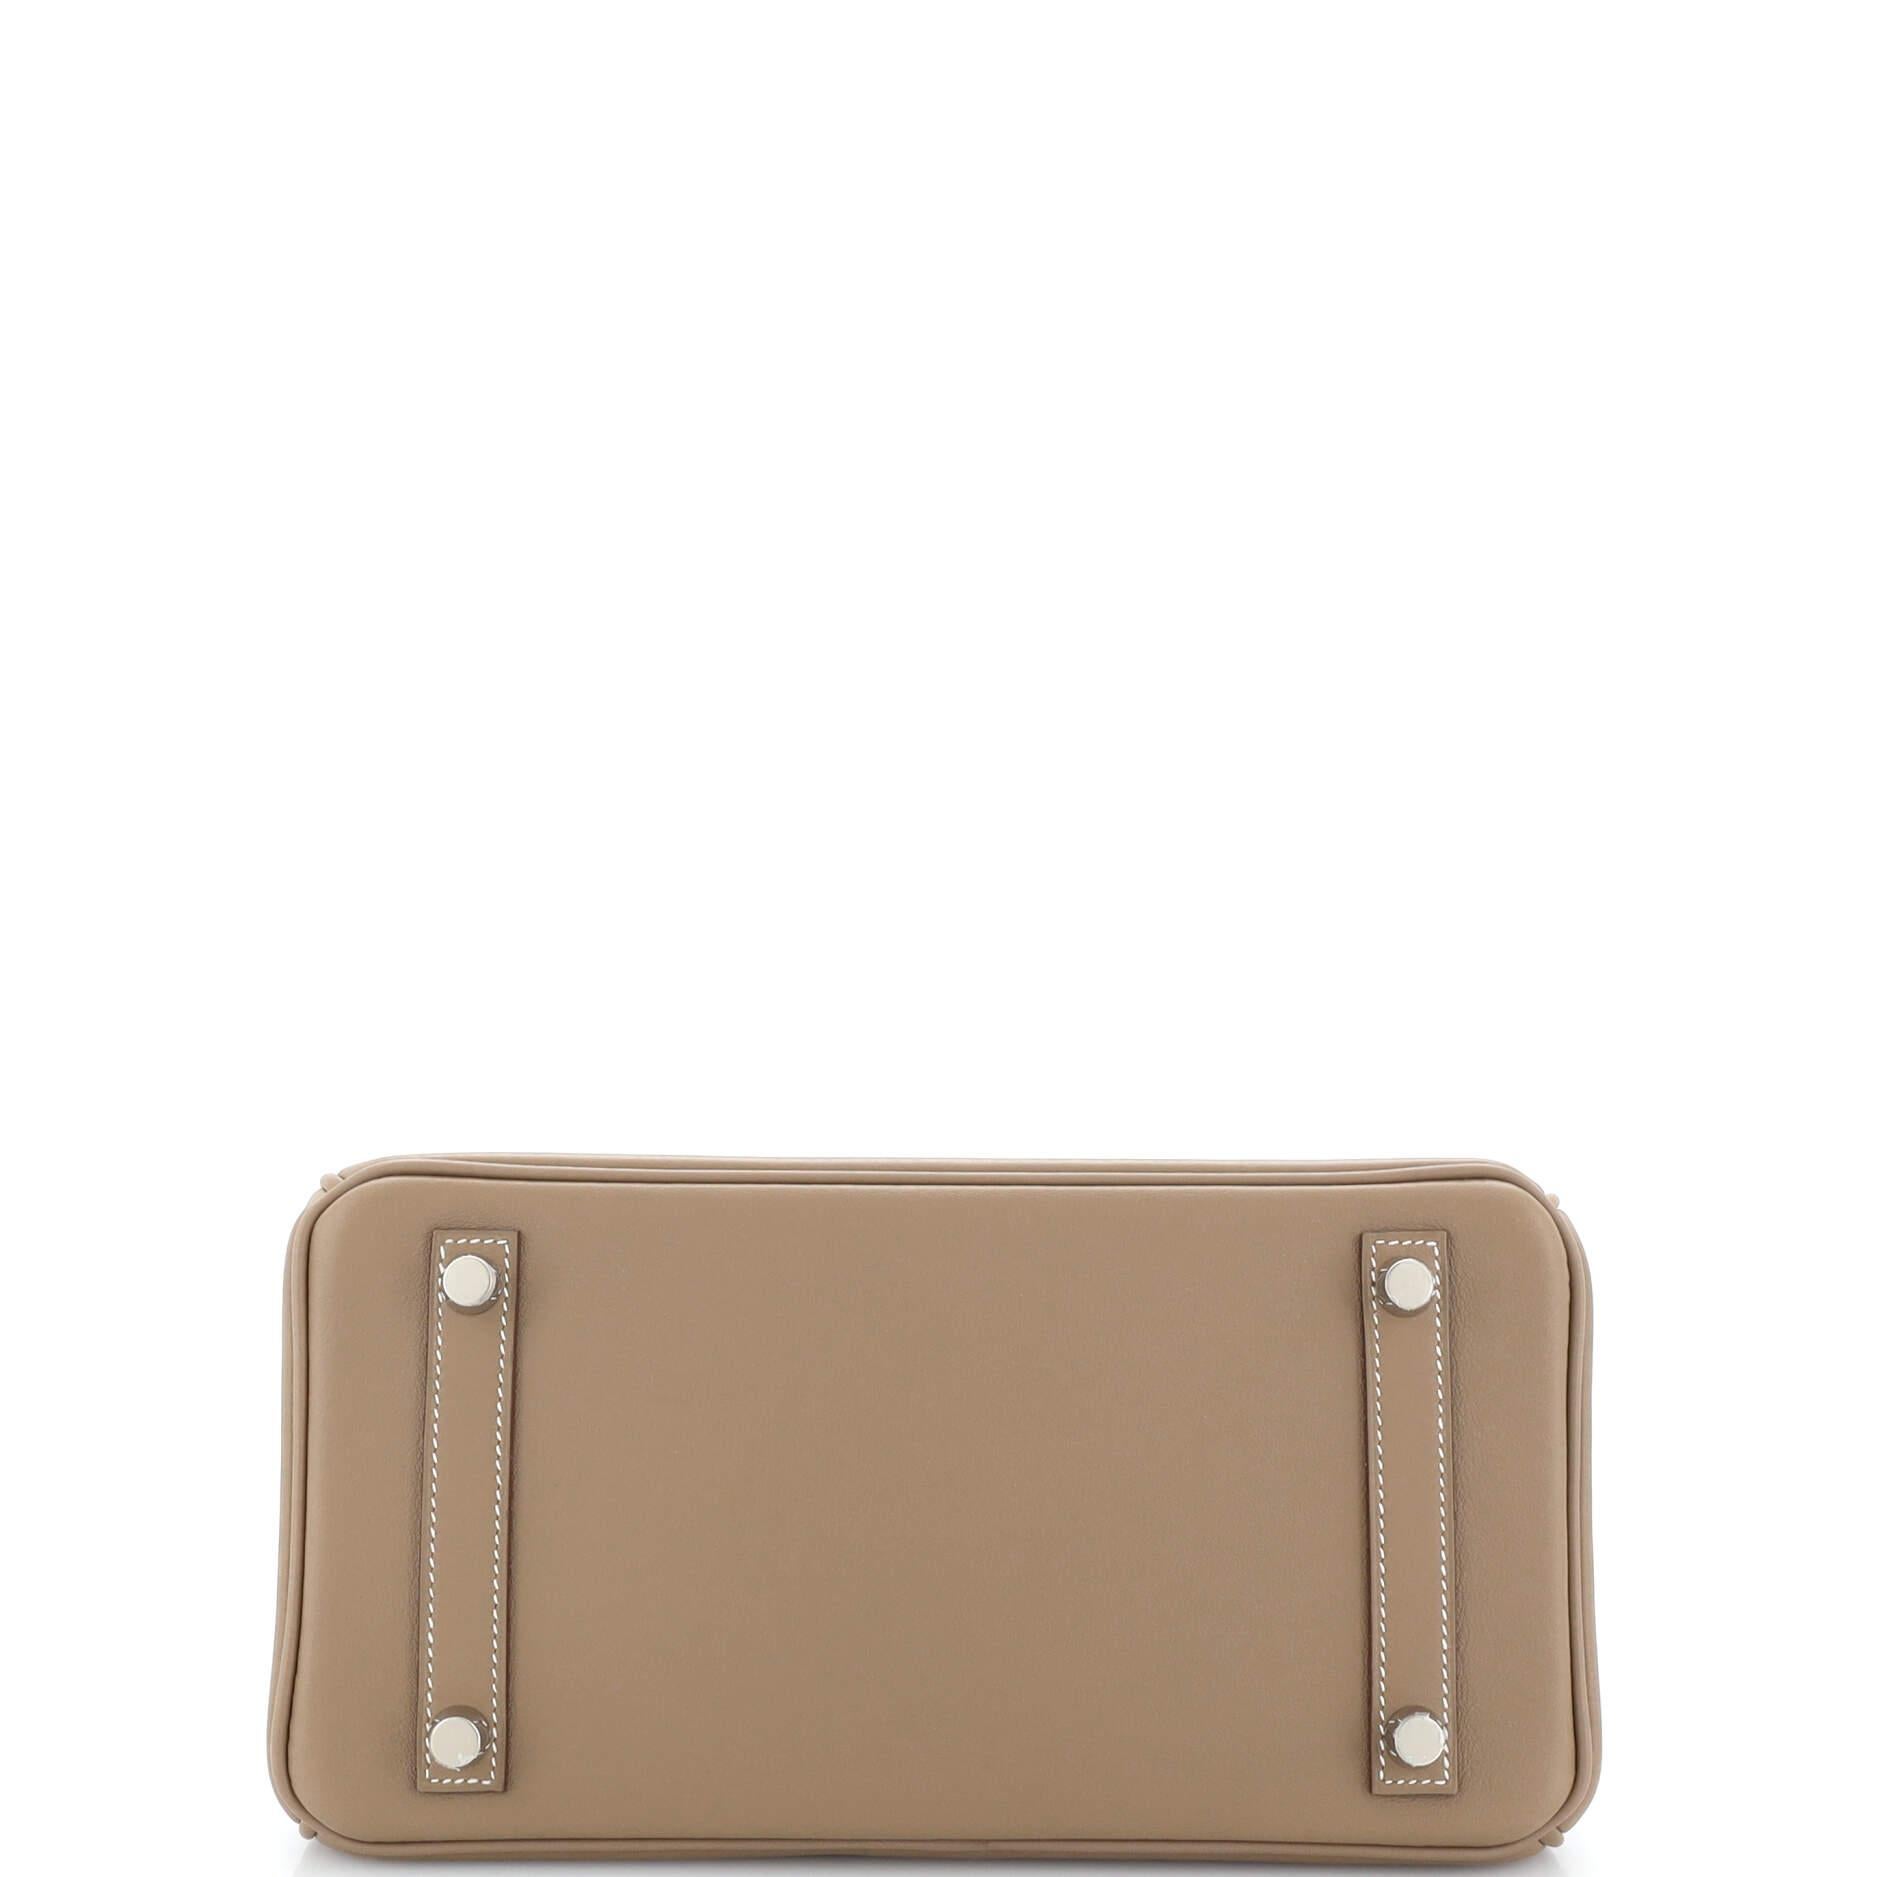 Hermes Birkin Handbag Grey Swift with Palladium Hardware 25 1